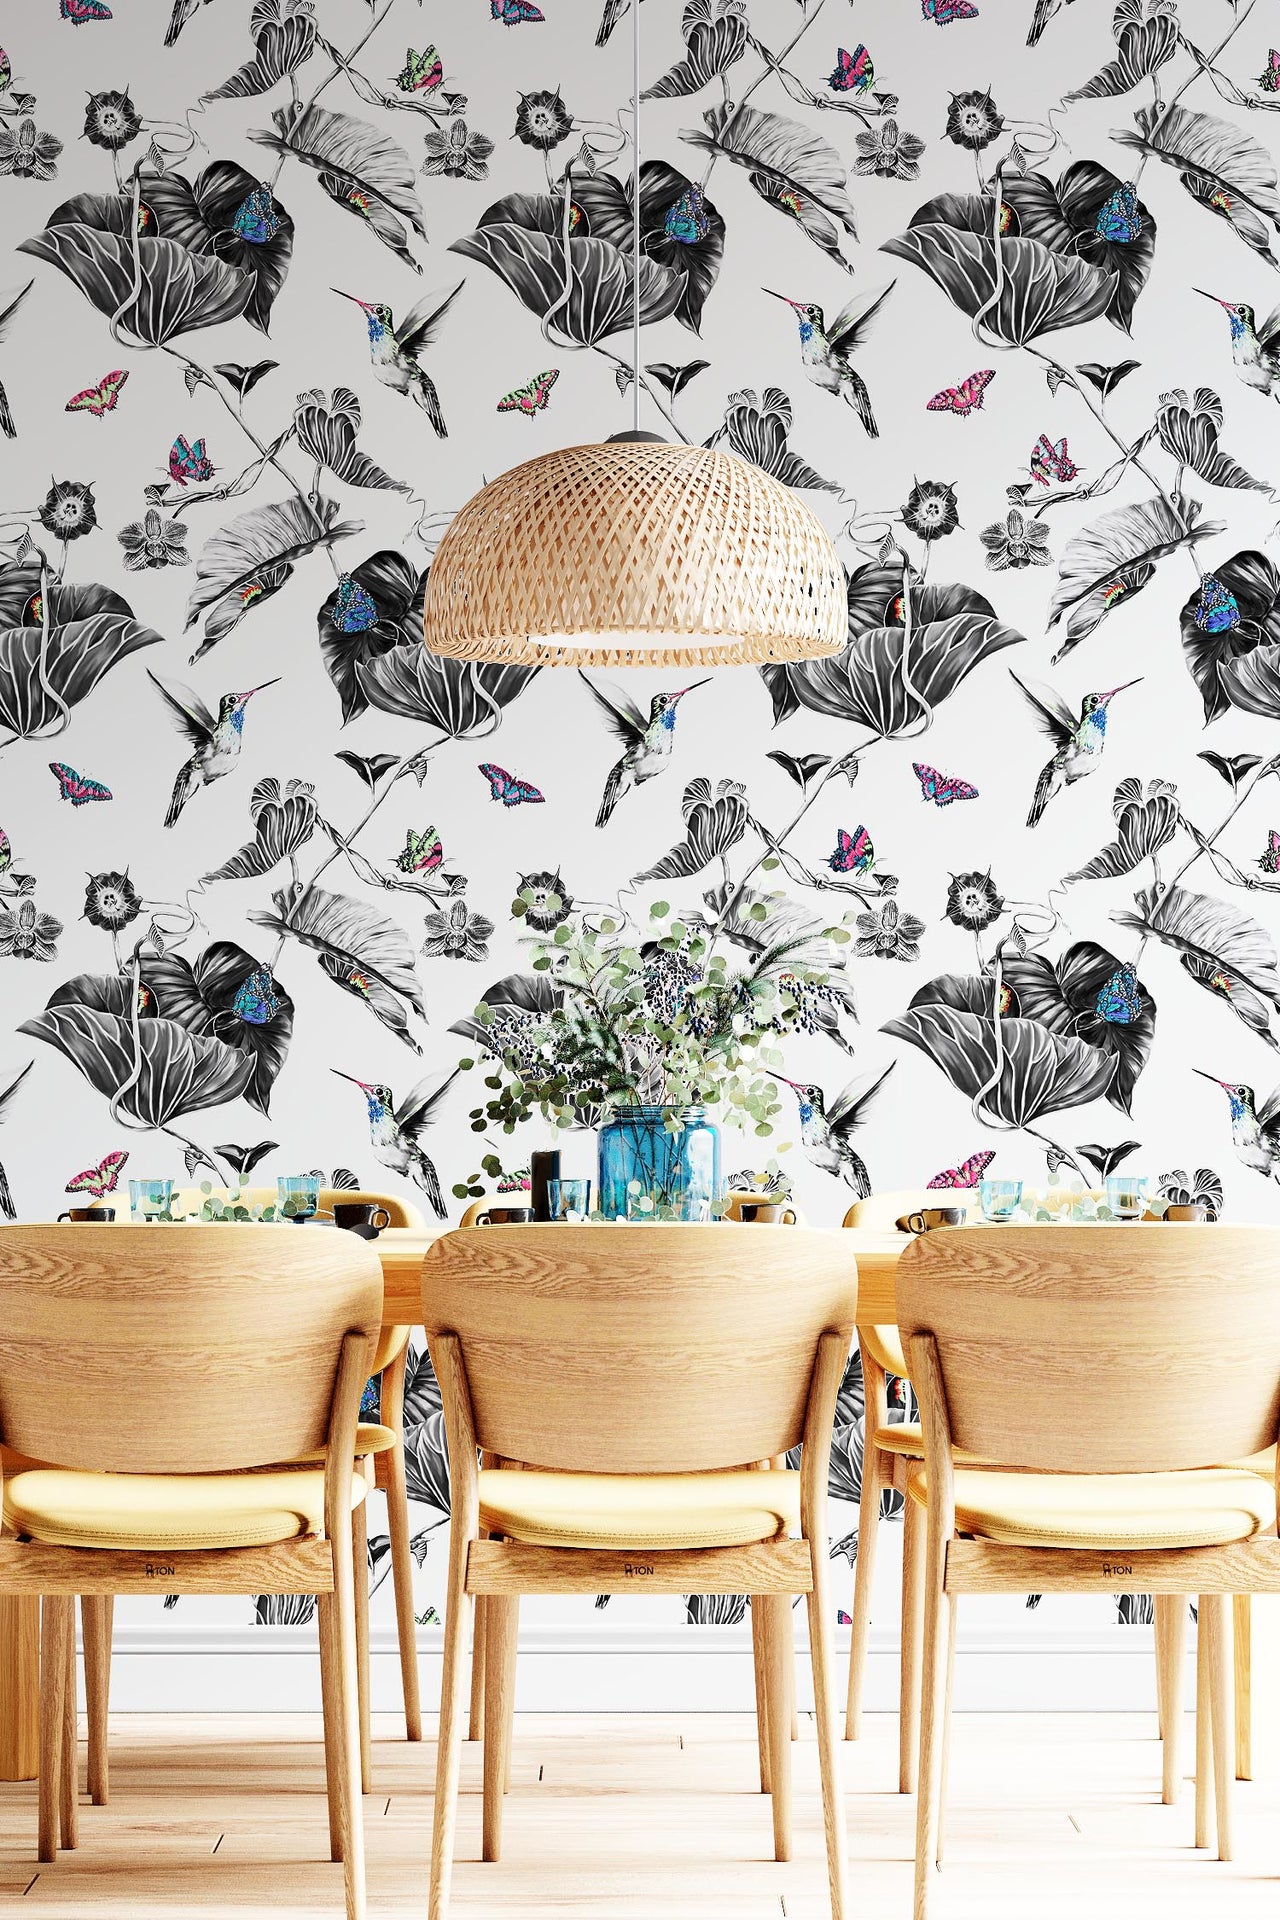 Hummingbird wallpaper on kitchen wall